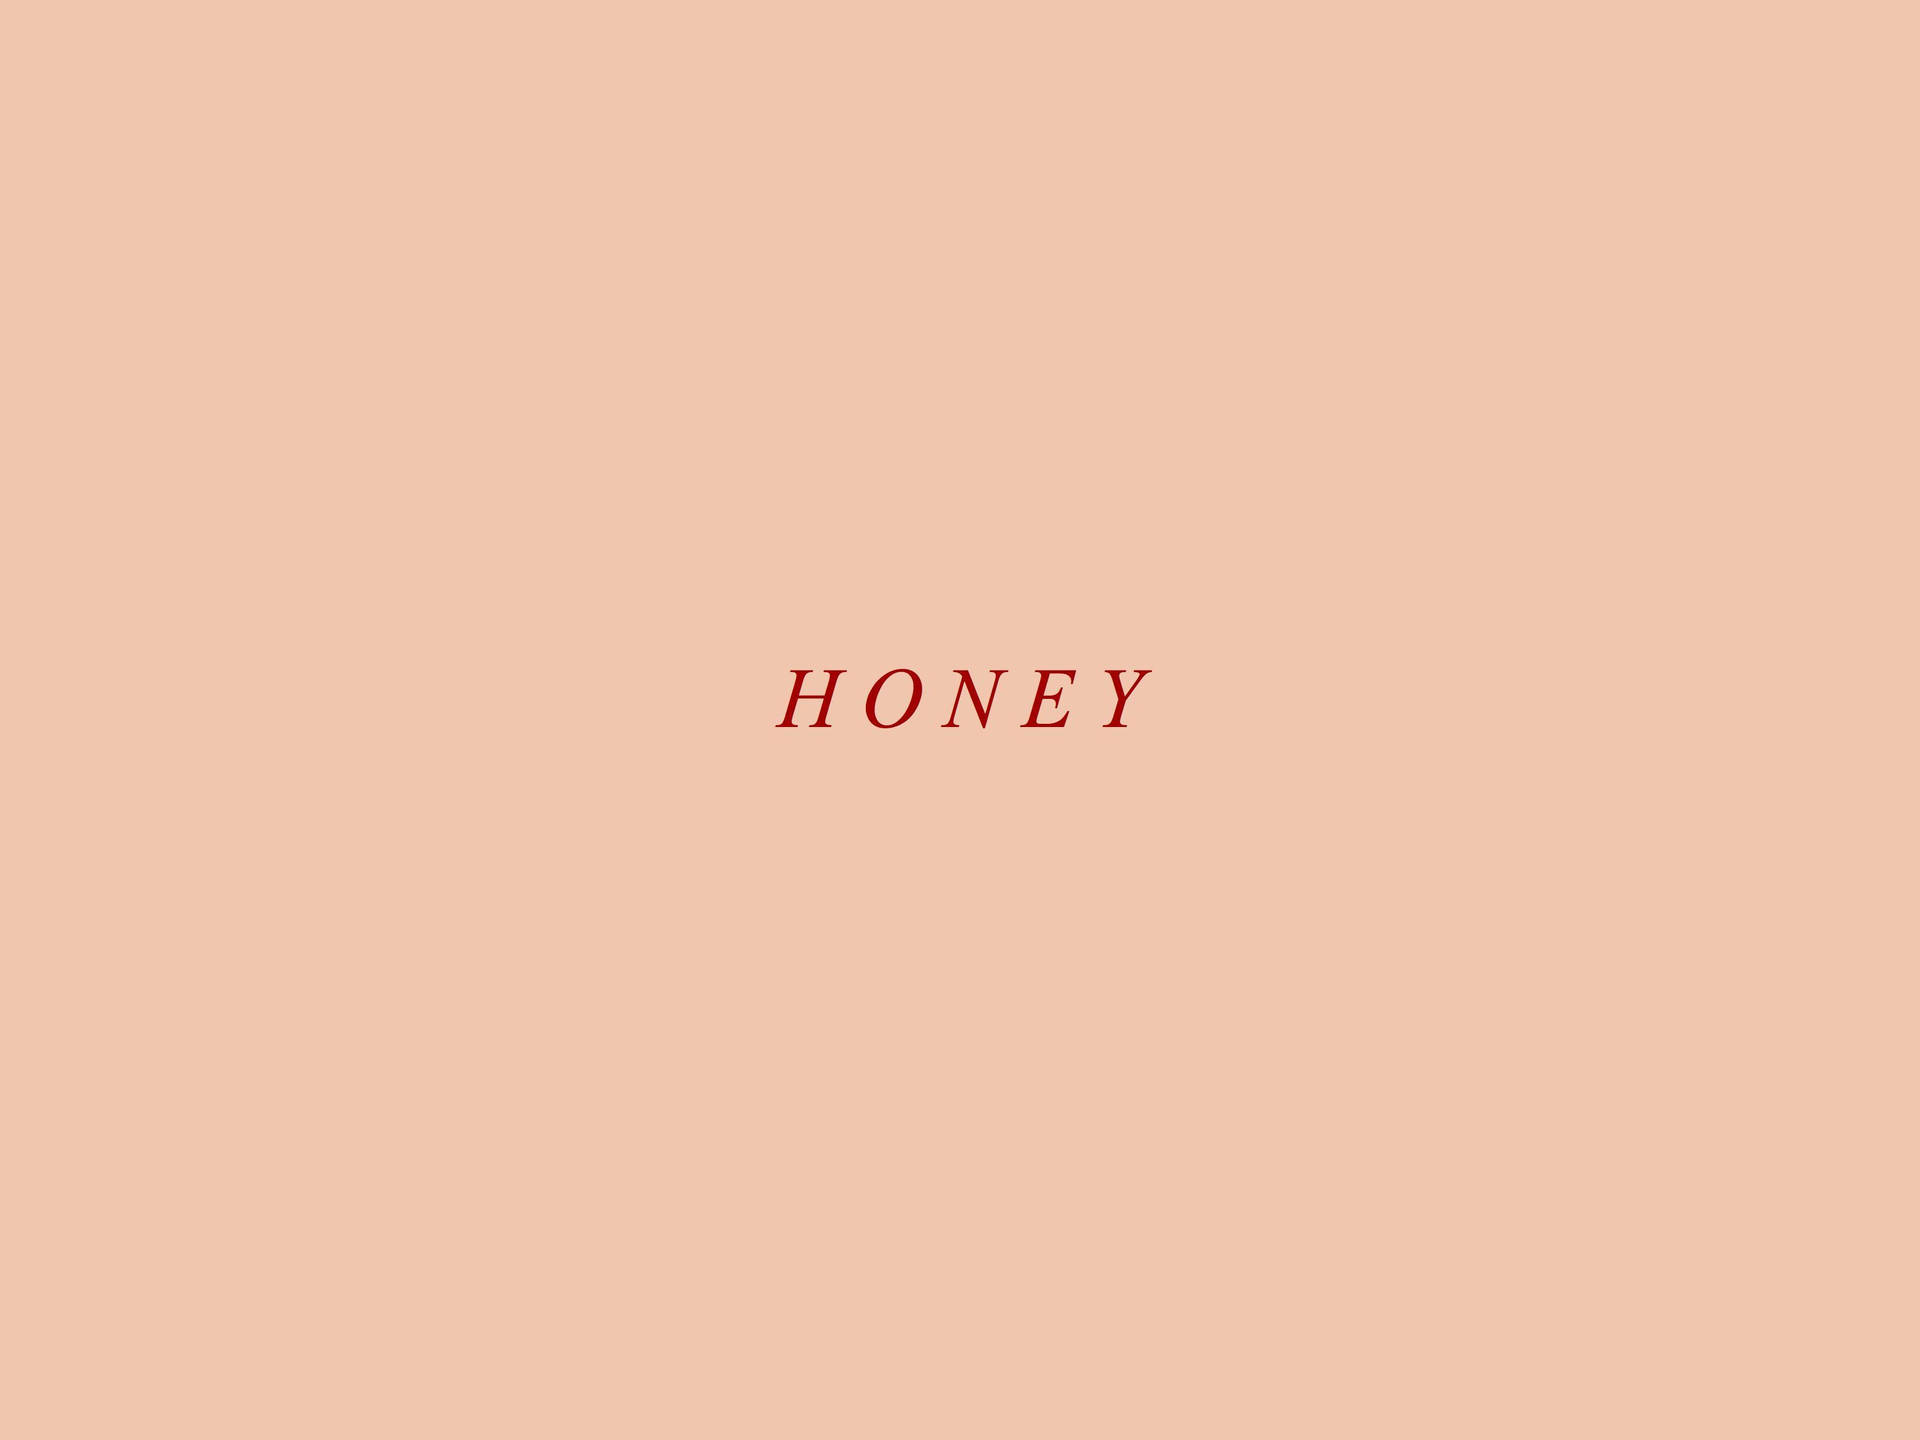 Minimalist Aesthetic Desktop Red Honey Word Picture